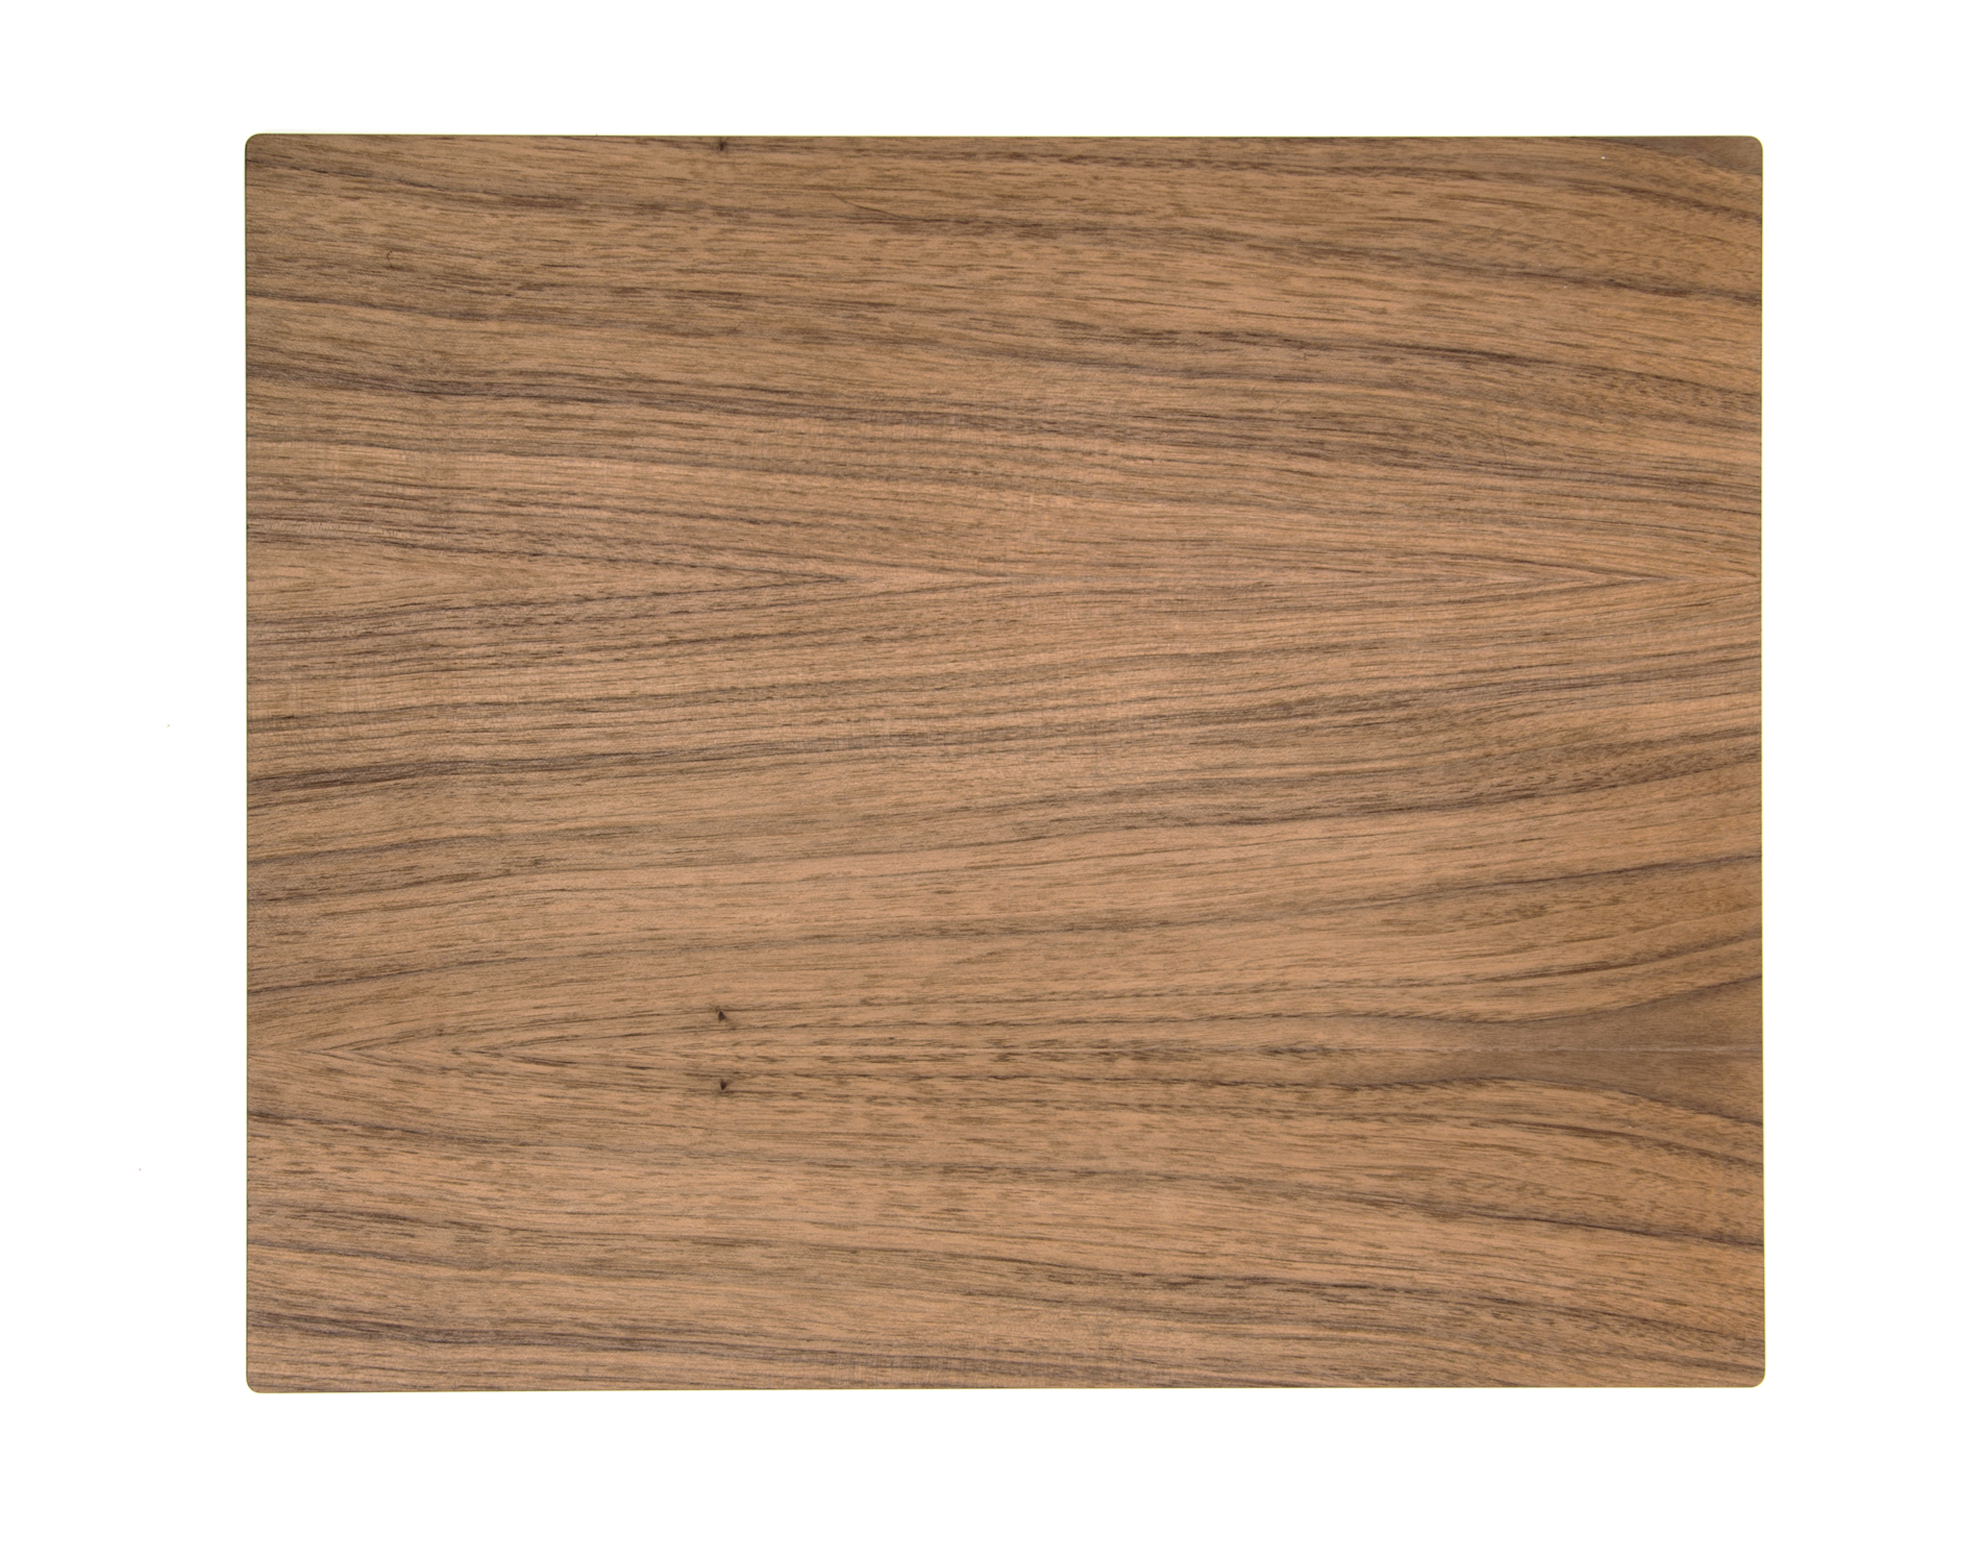 epicurean-serving board-display rectangle series-walnut-slate-18×14-02018144202